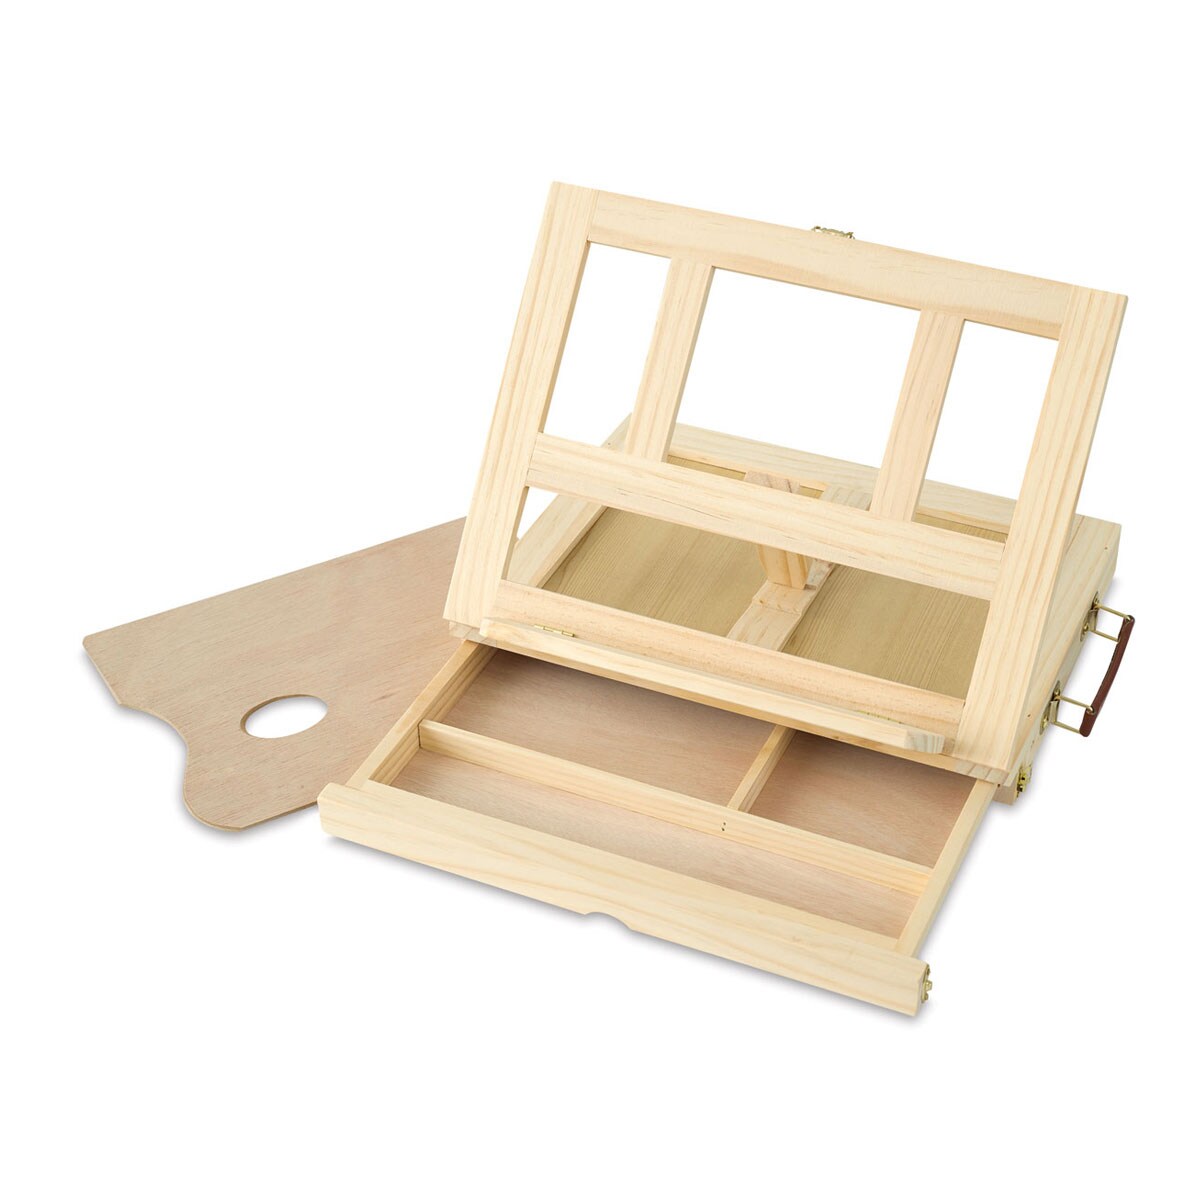 Blick Studio Sketchbox Table Easel